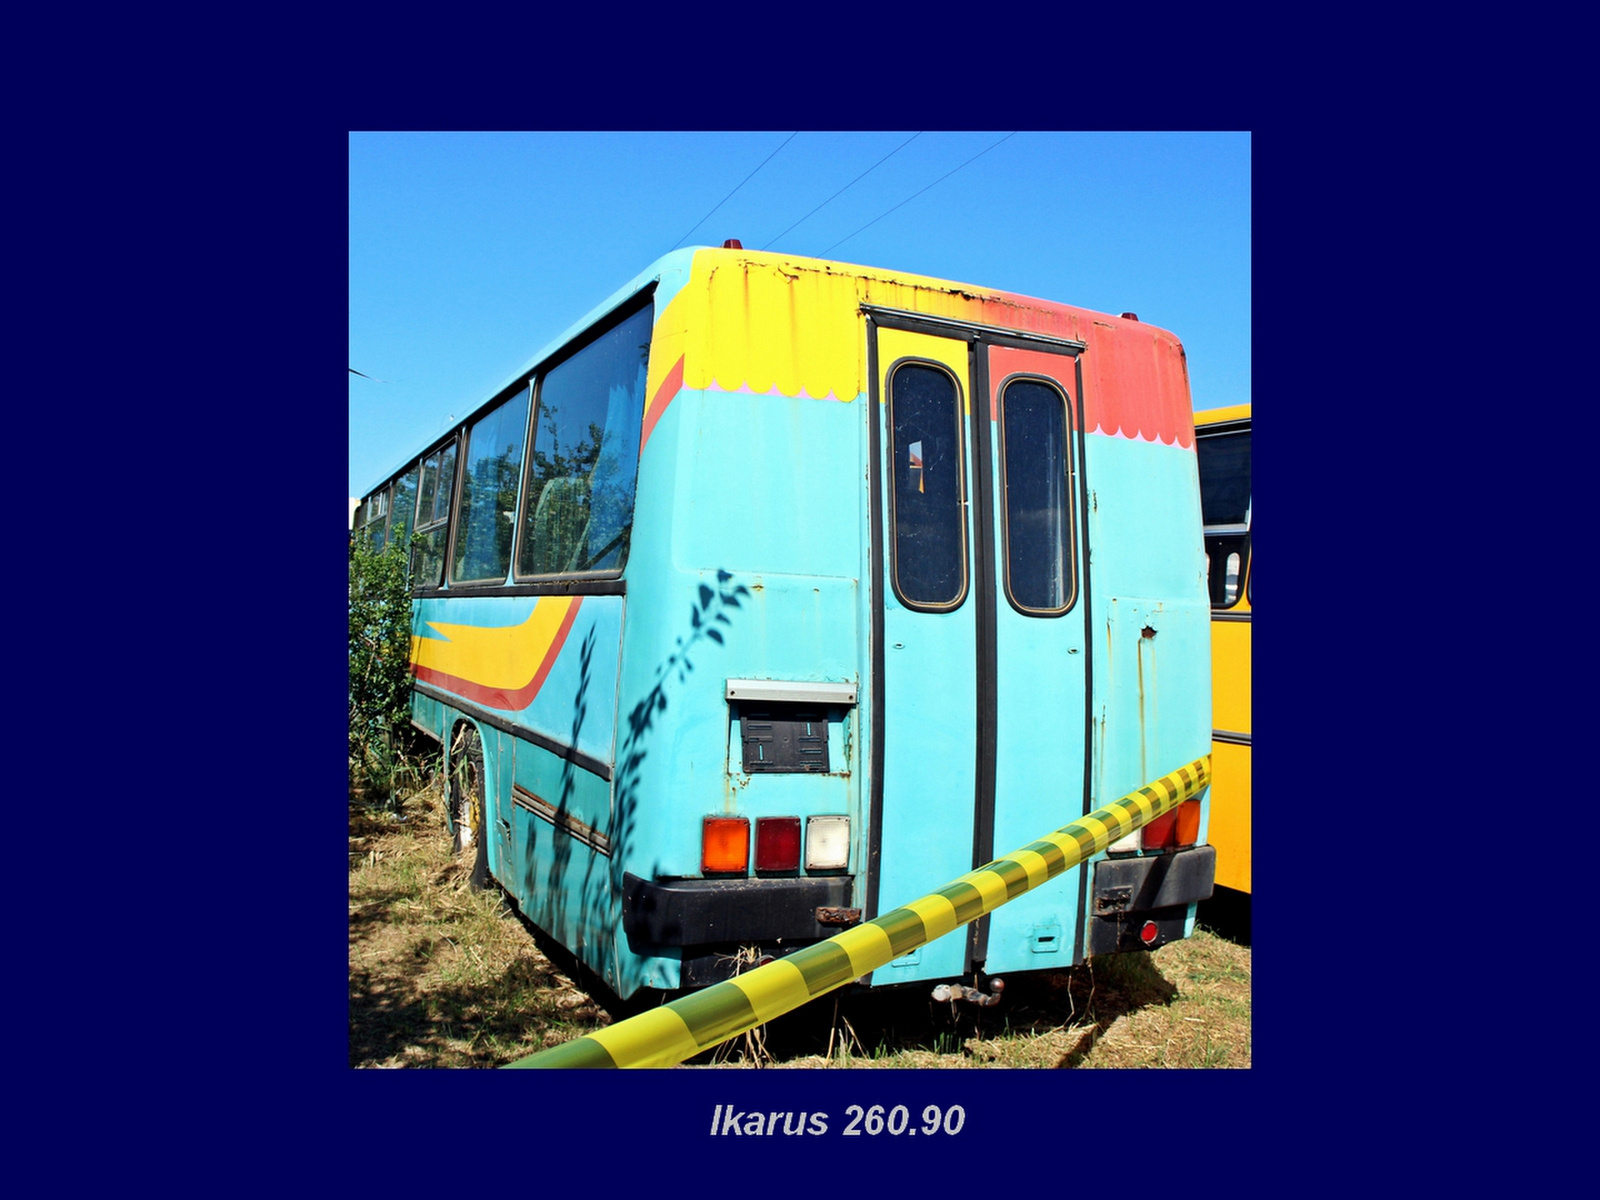 Magyar busz, Ikarus 260.90